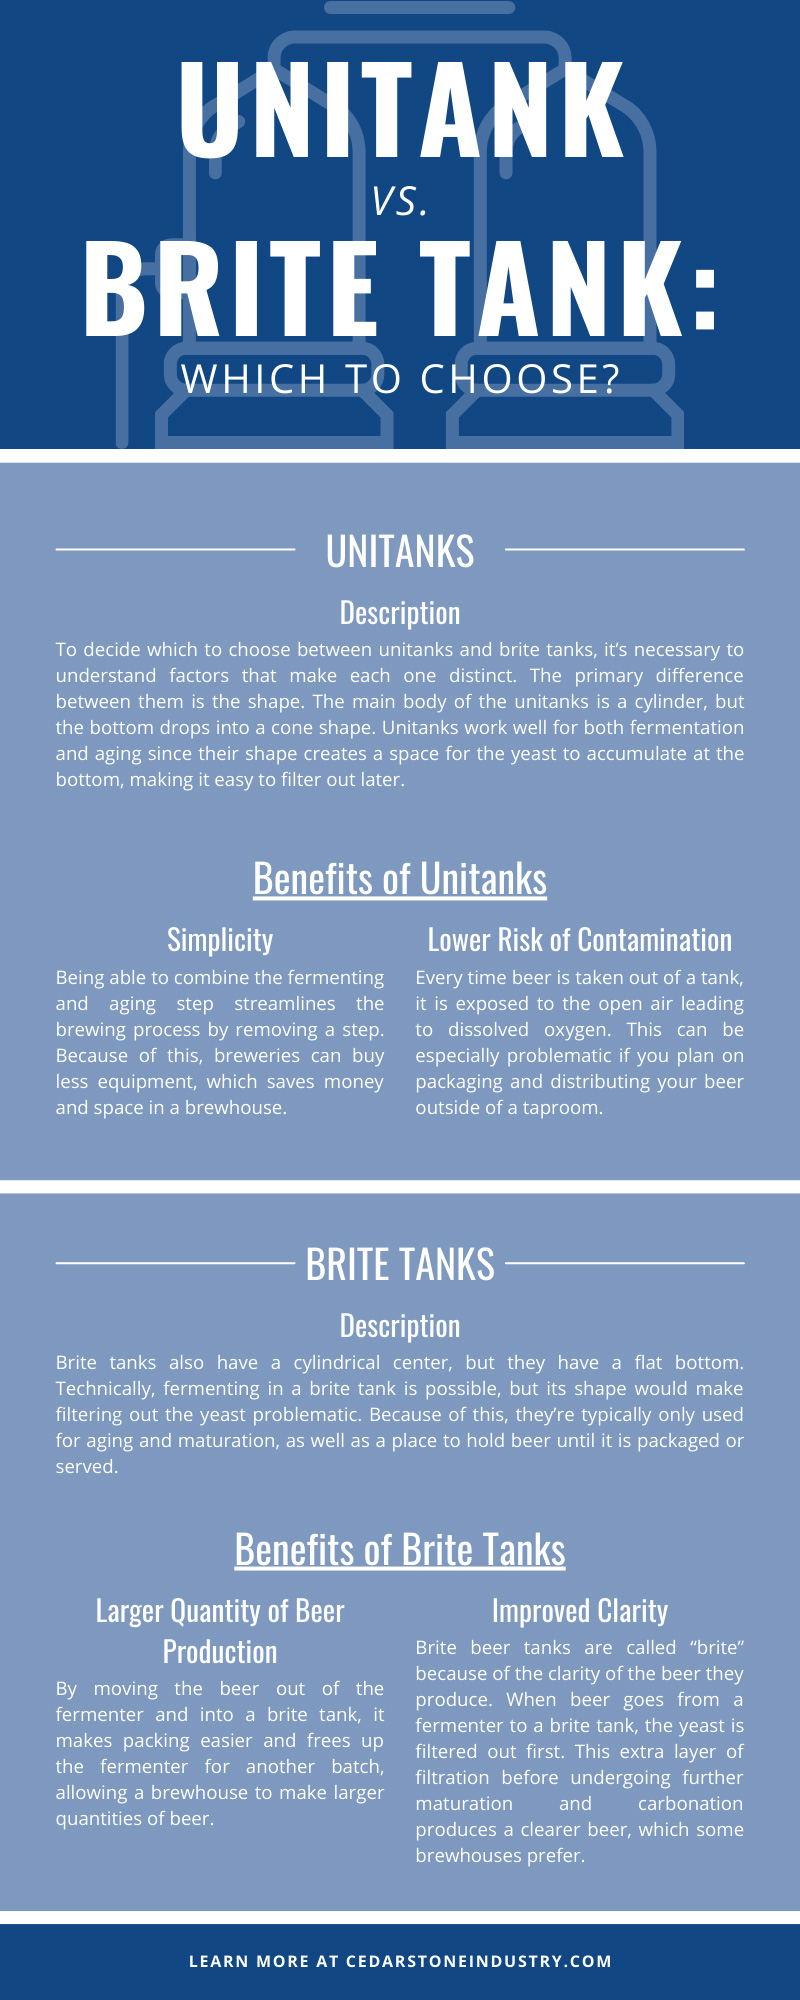 Unitank vs. Brite Tank: Which To Choose?